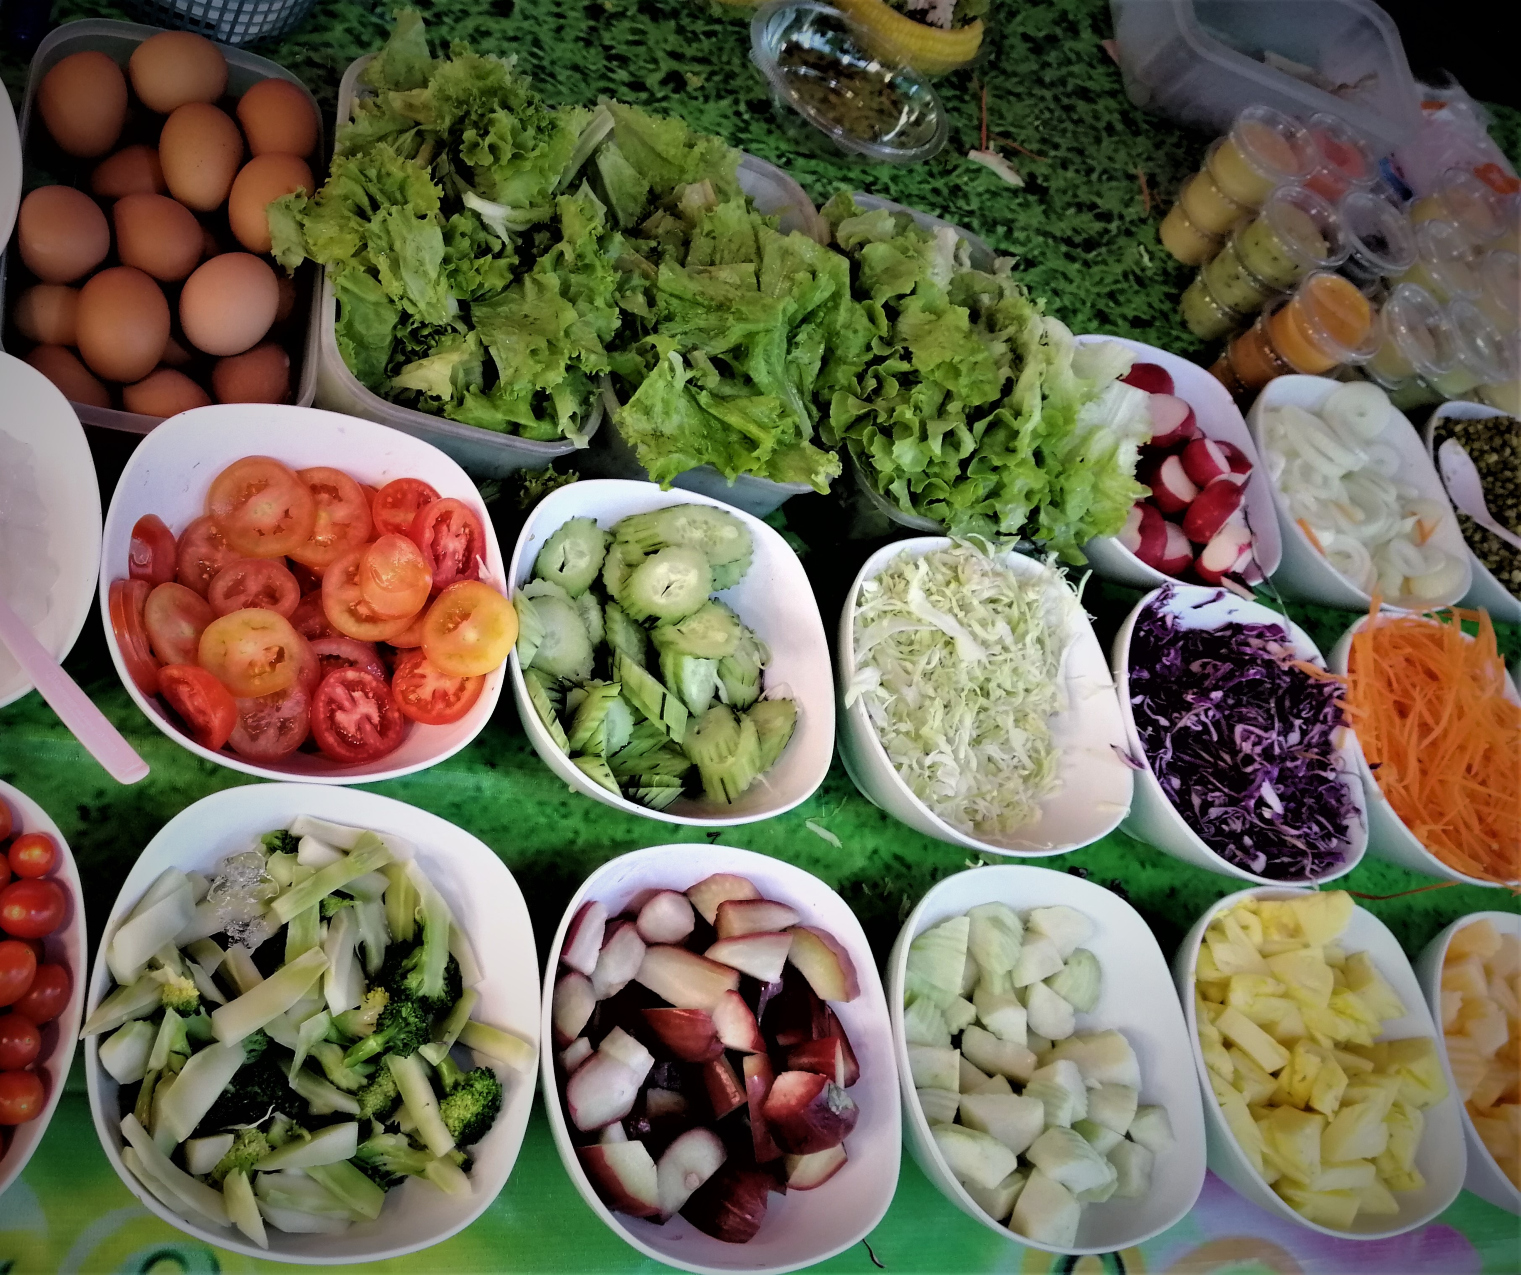 Food veggies on display at a night market in Khon Kaen, Isaan, Thailand